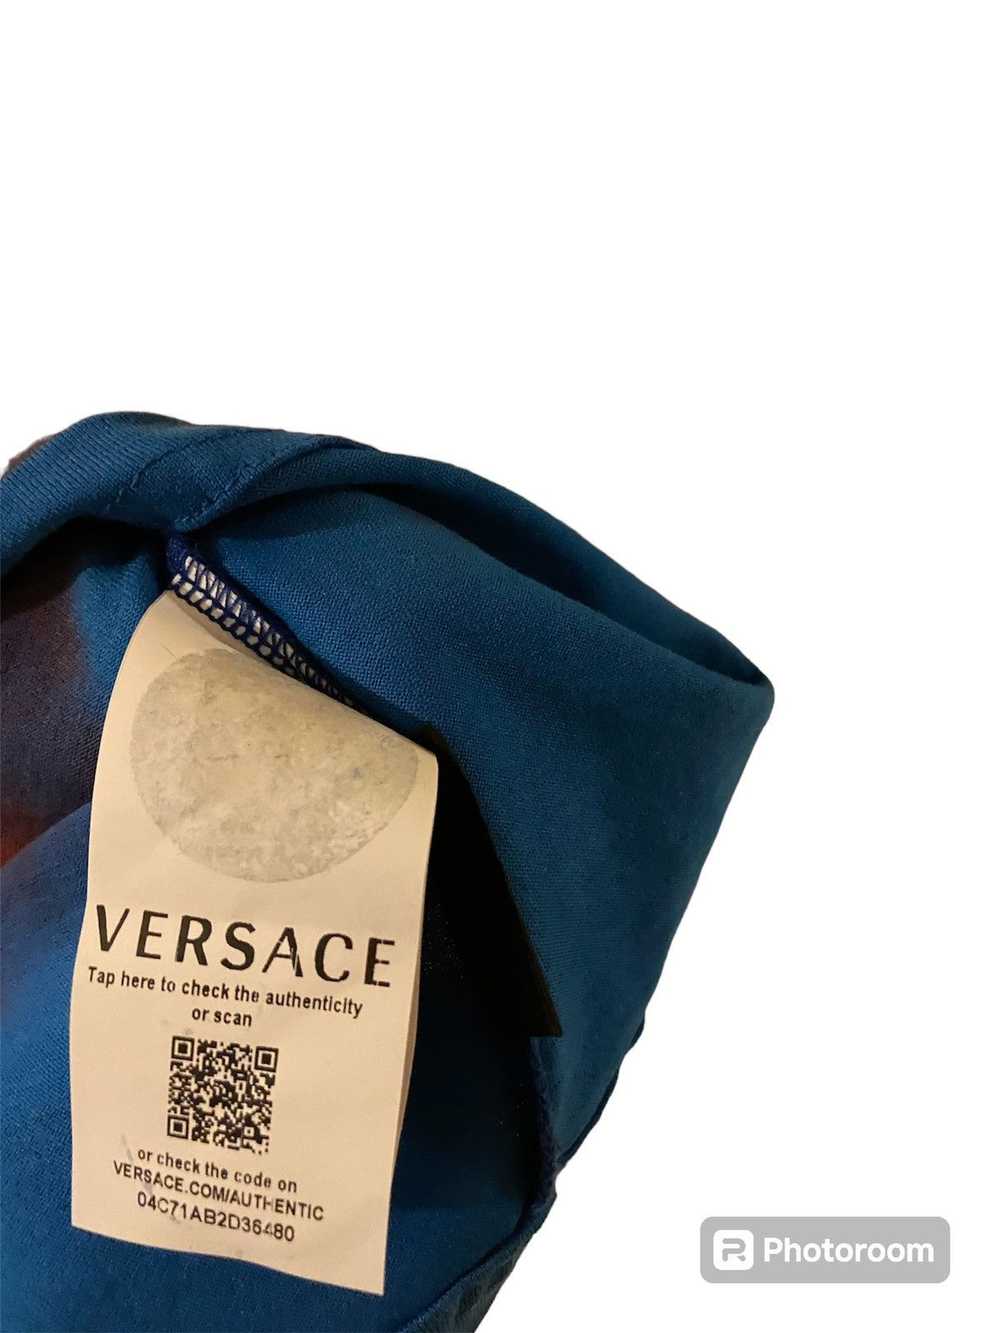 Versace Long Sleeve Versace Tye Dye T-shirt - image 4